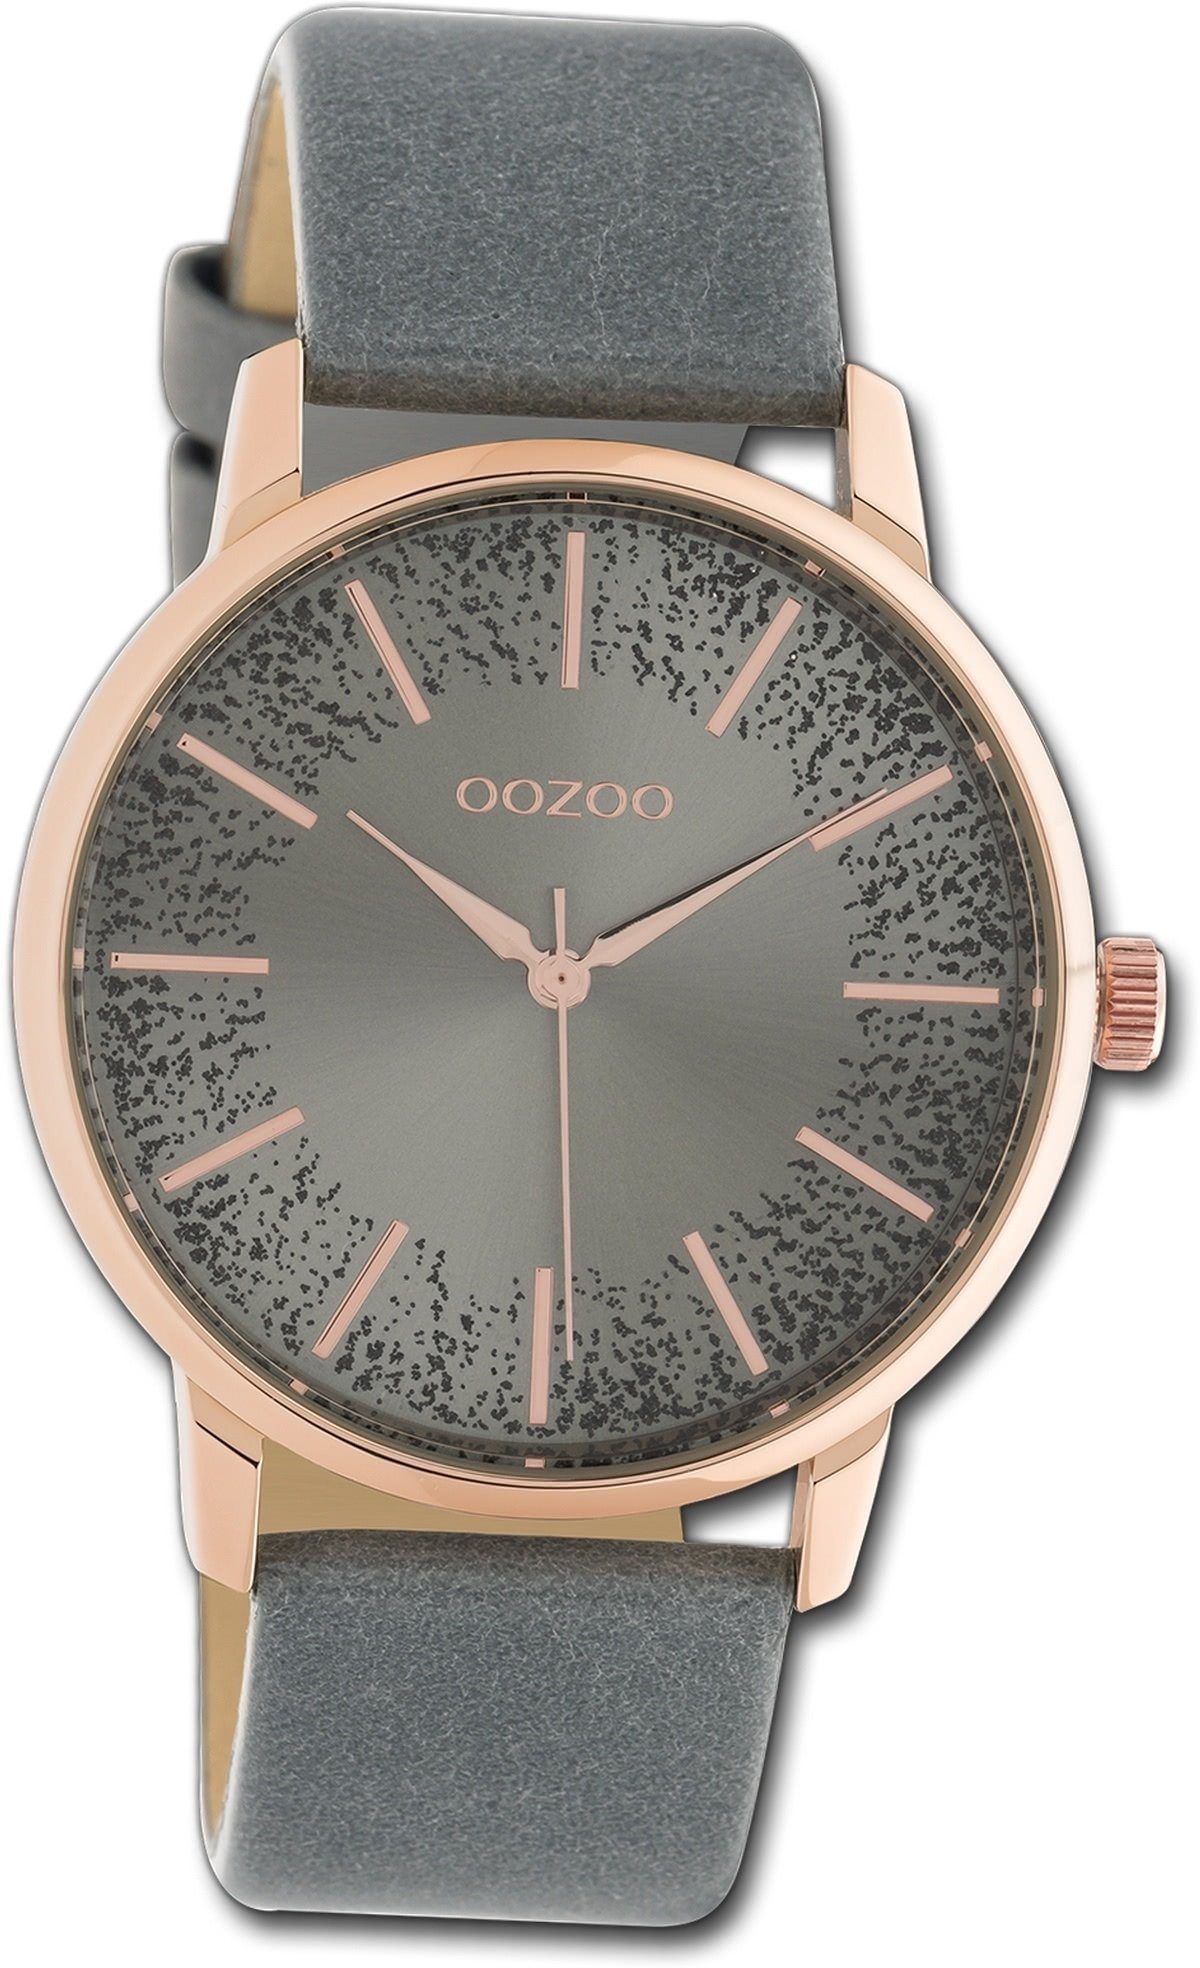 Damen Timepieces 40mm) (ca. Oozoo Uhr Damenuhr Lederarmband rundes C10718, OOZOO blaugrau, Quarzuhr groß Gehäuse,